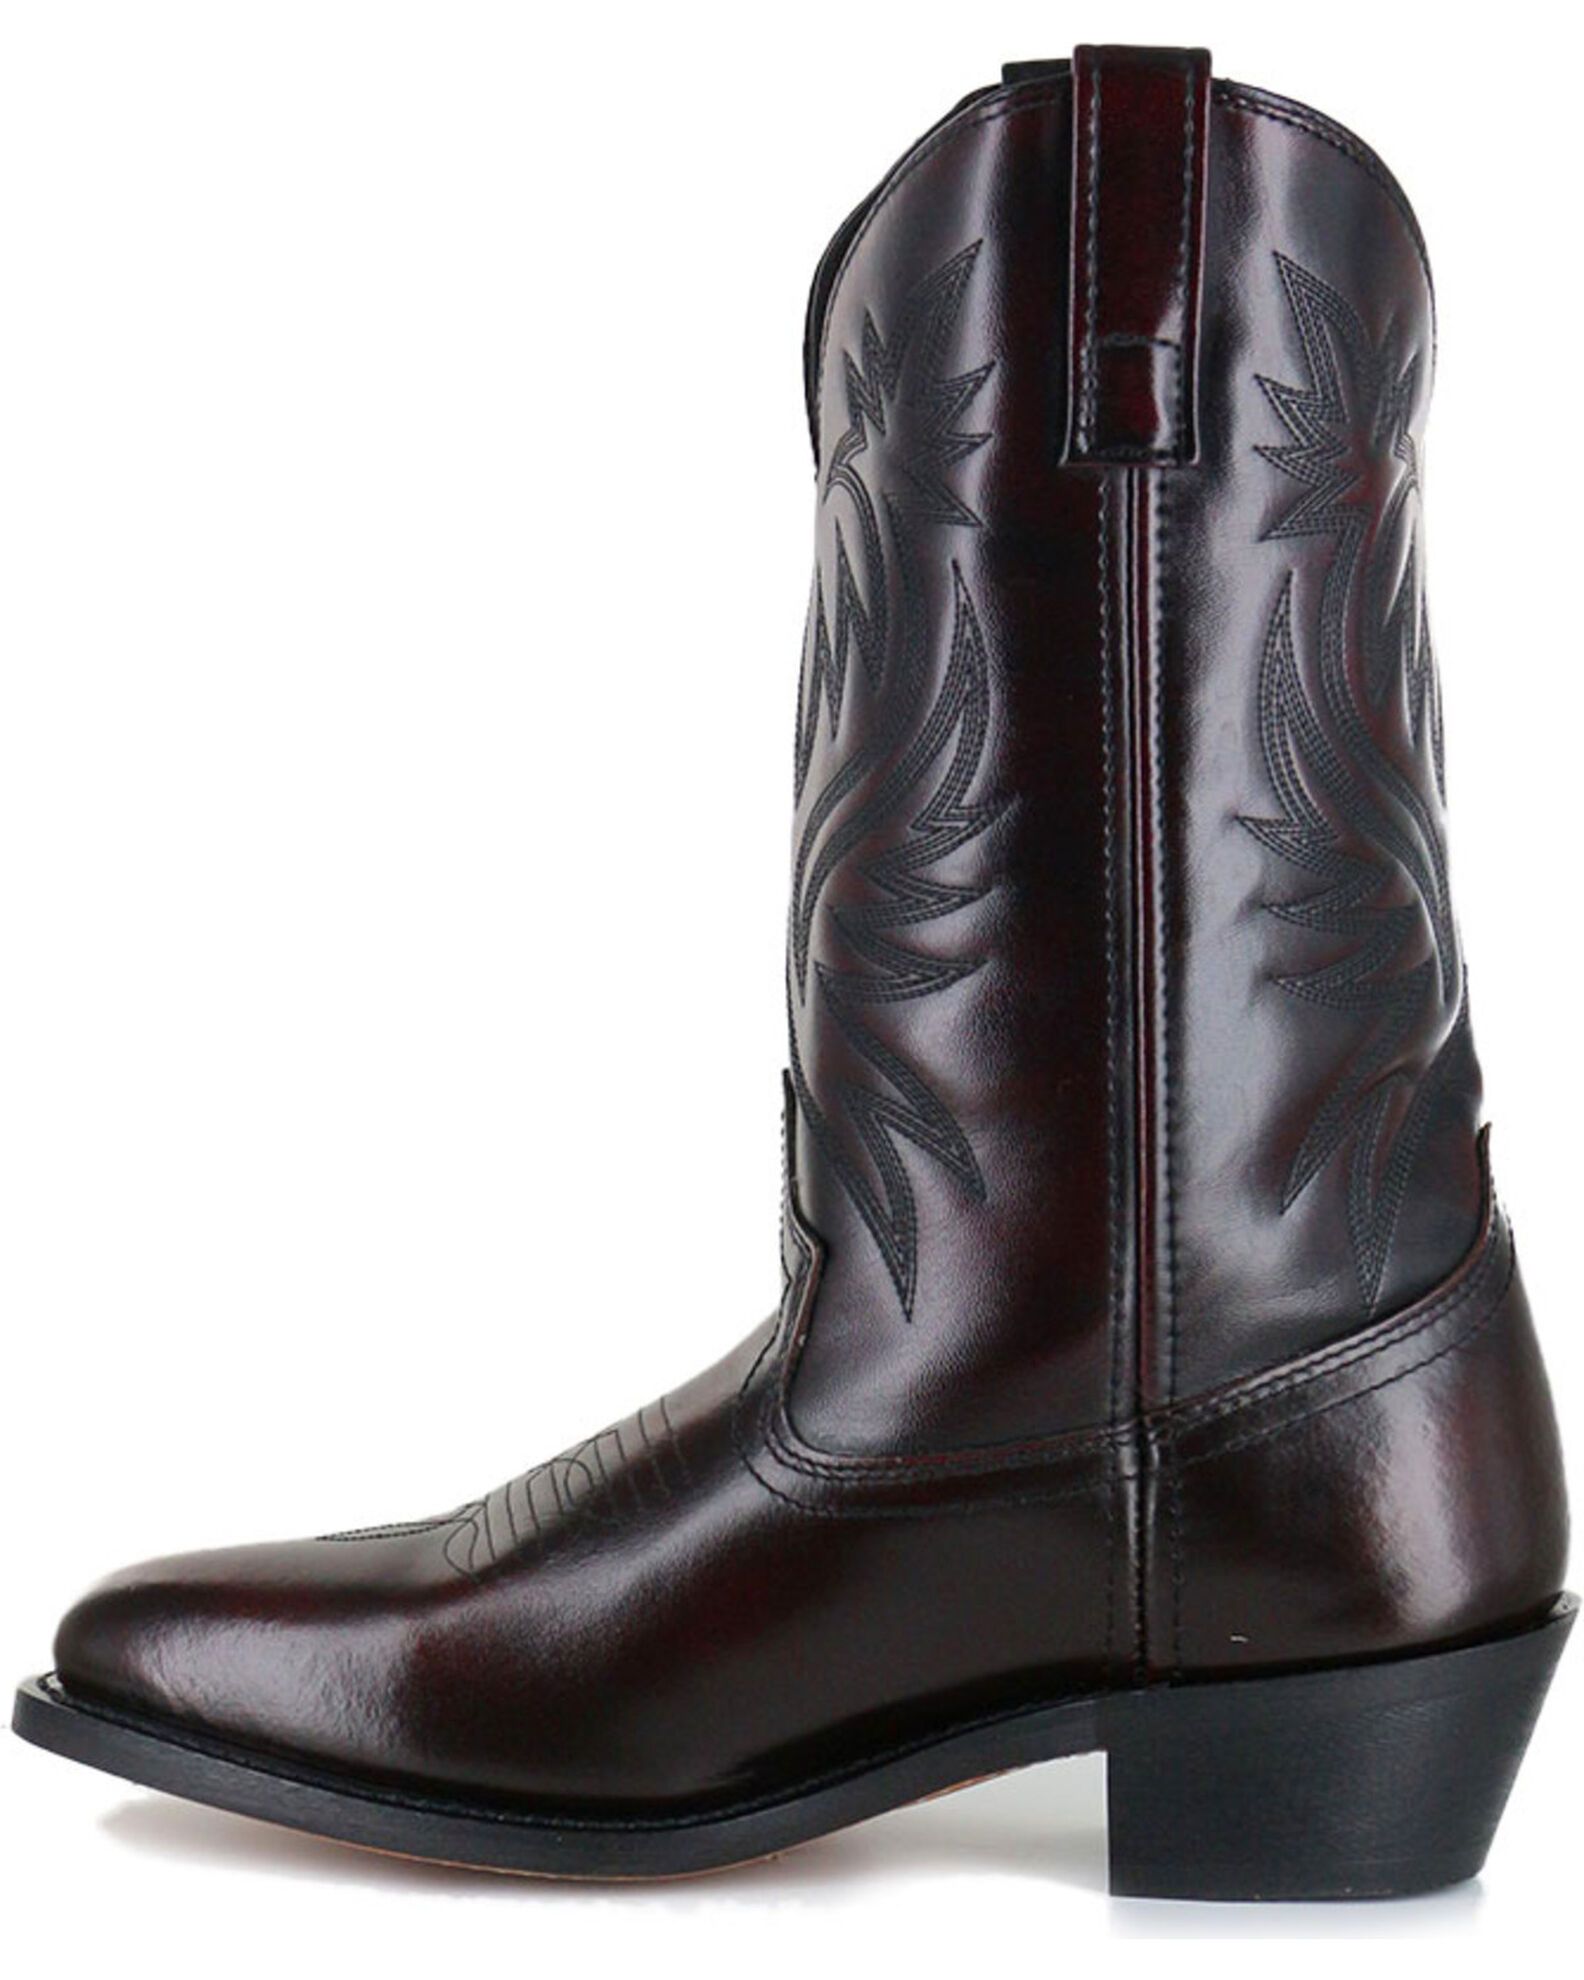 Cody James Men's Western Boots - Medium Toe